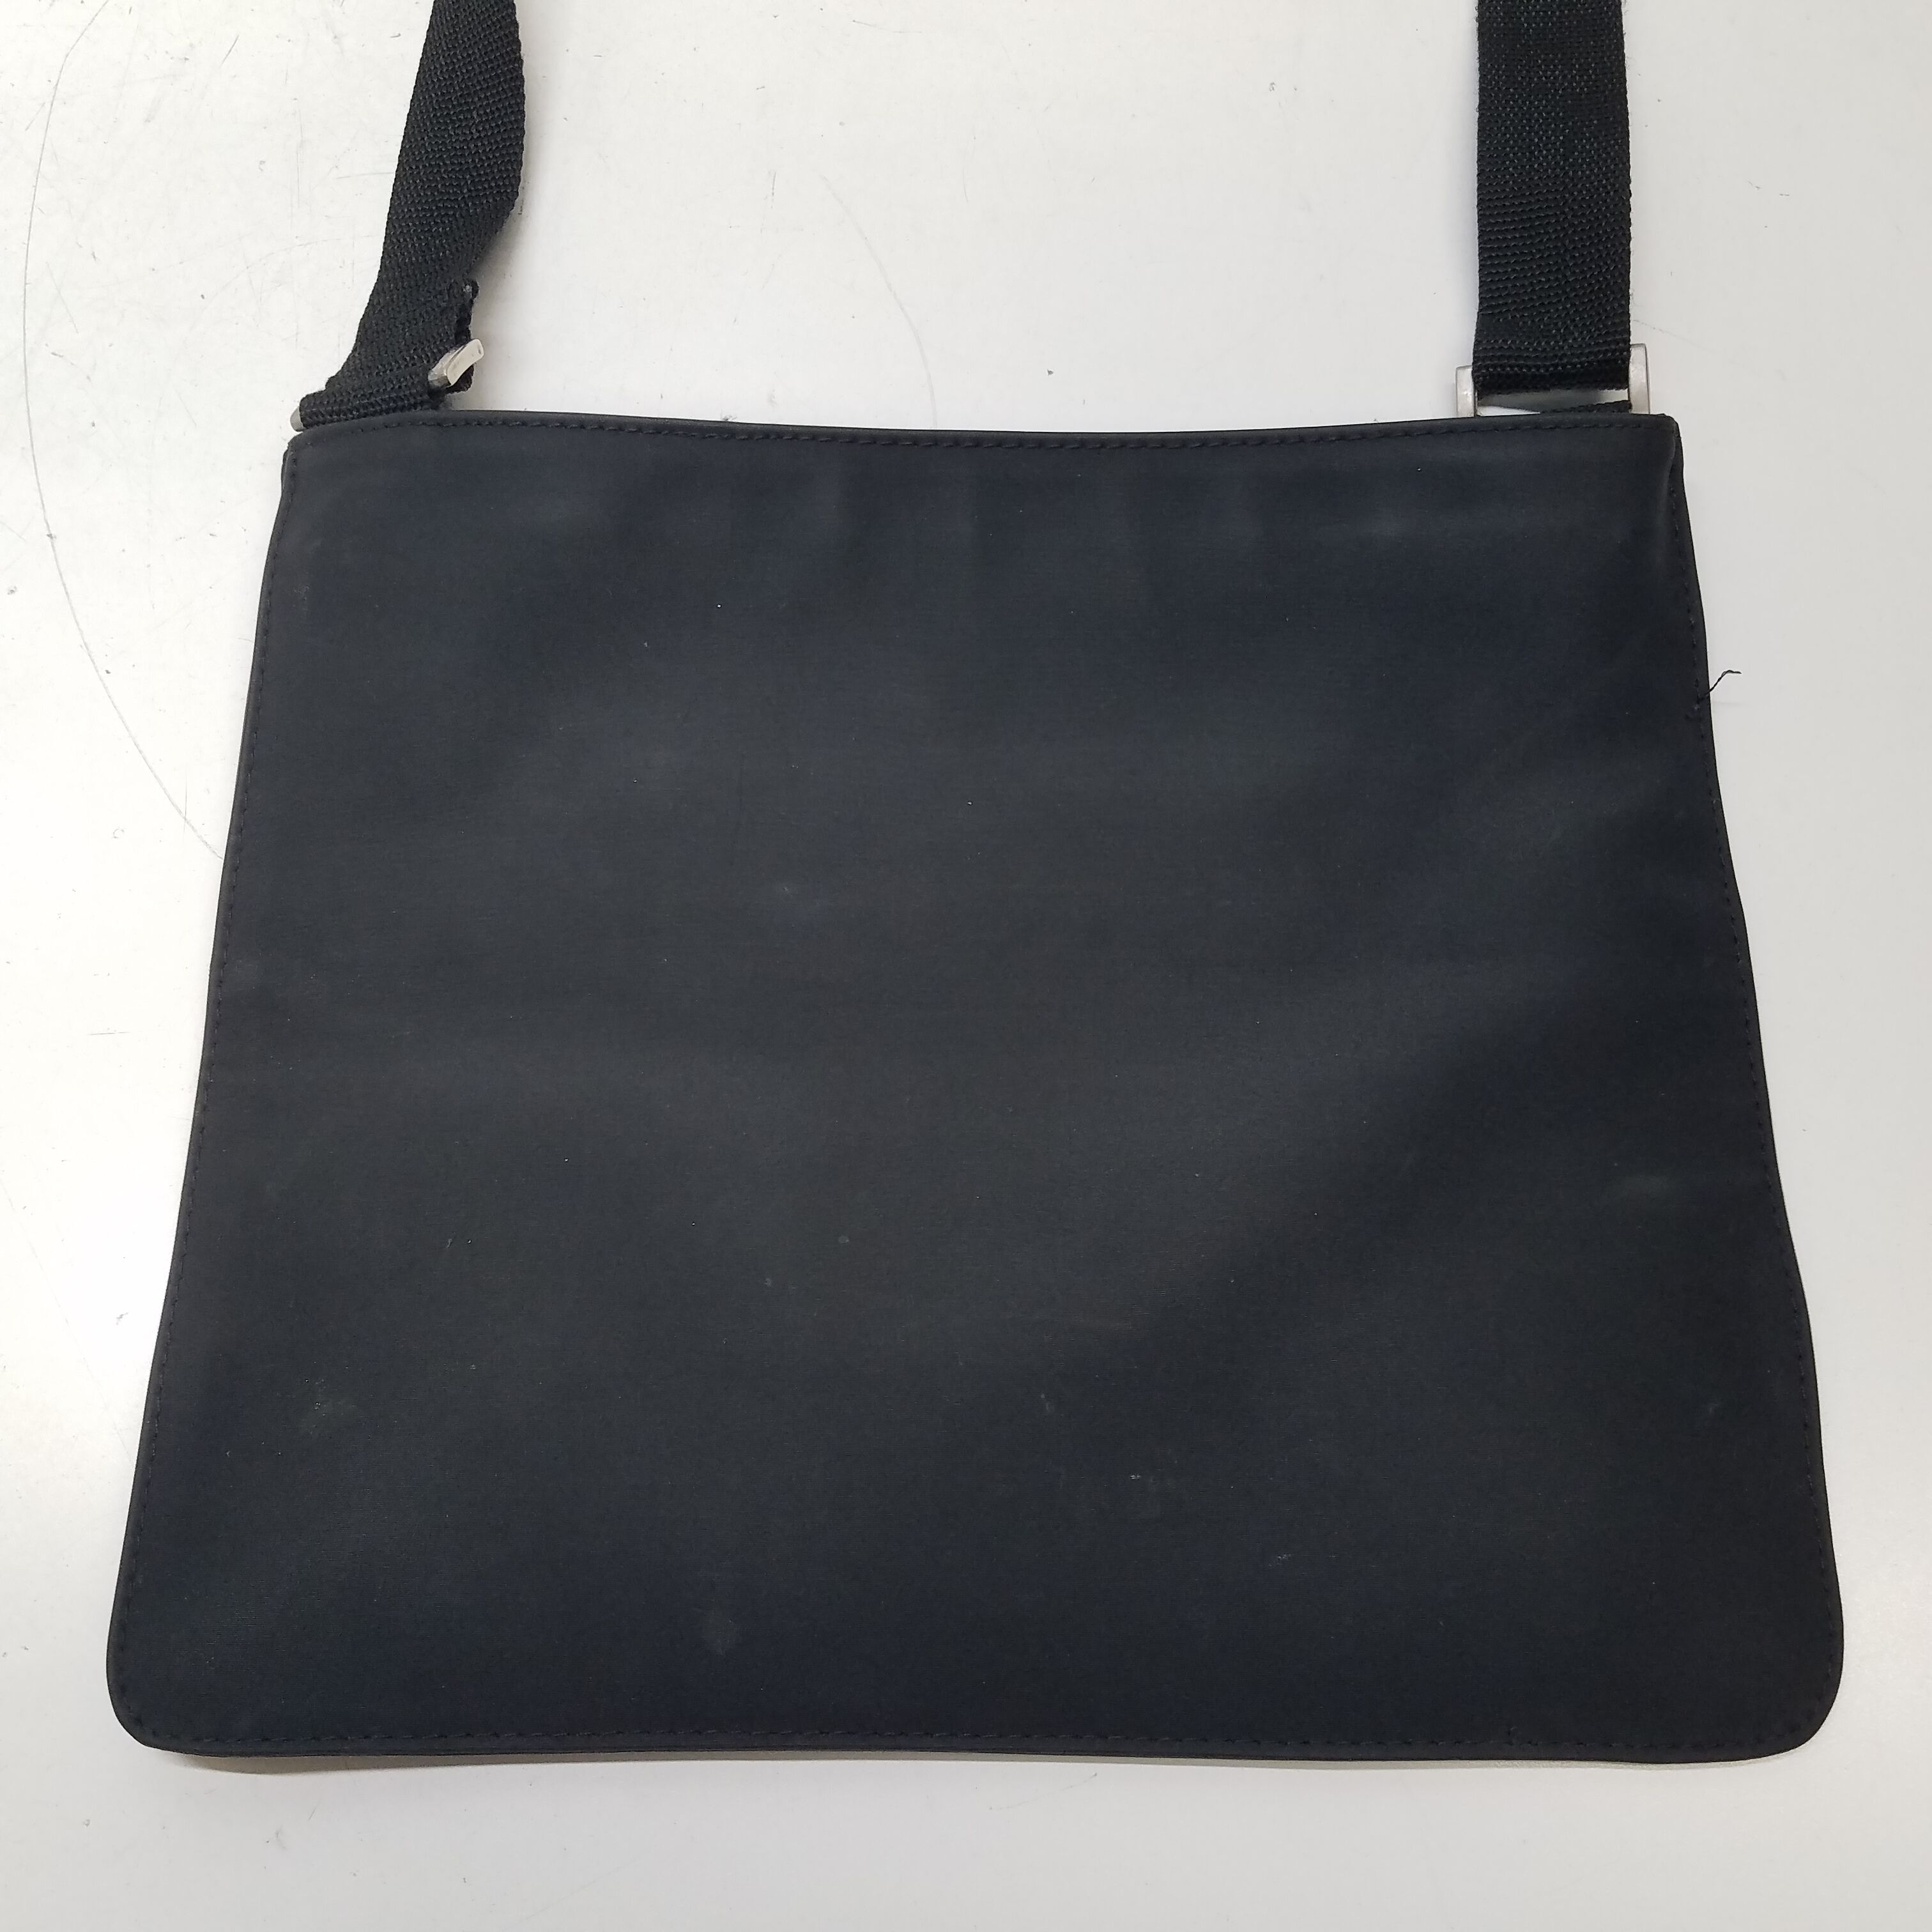 Handbags Black Hand Bag at Rs 500/piece in Noida | ID: 21688536748